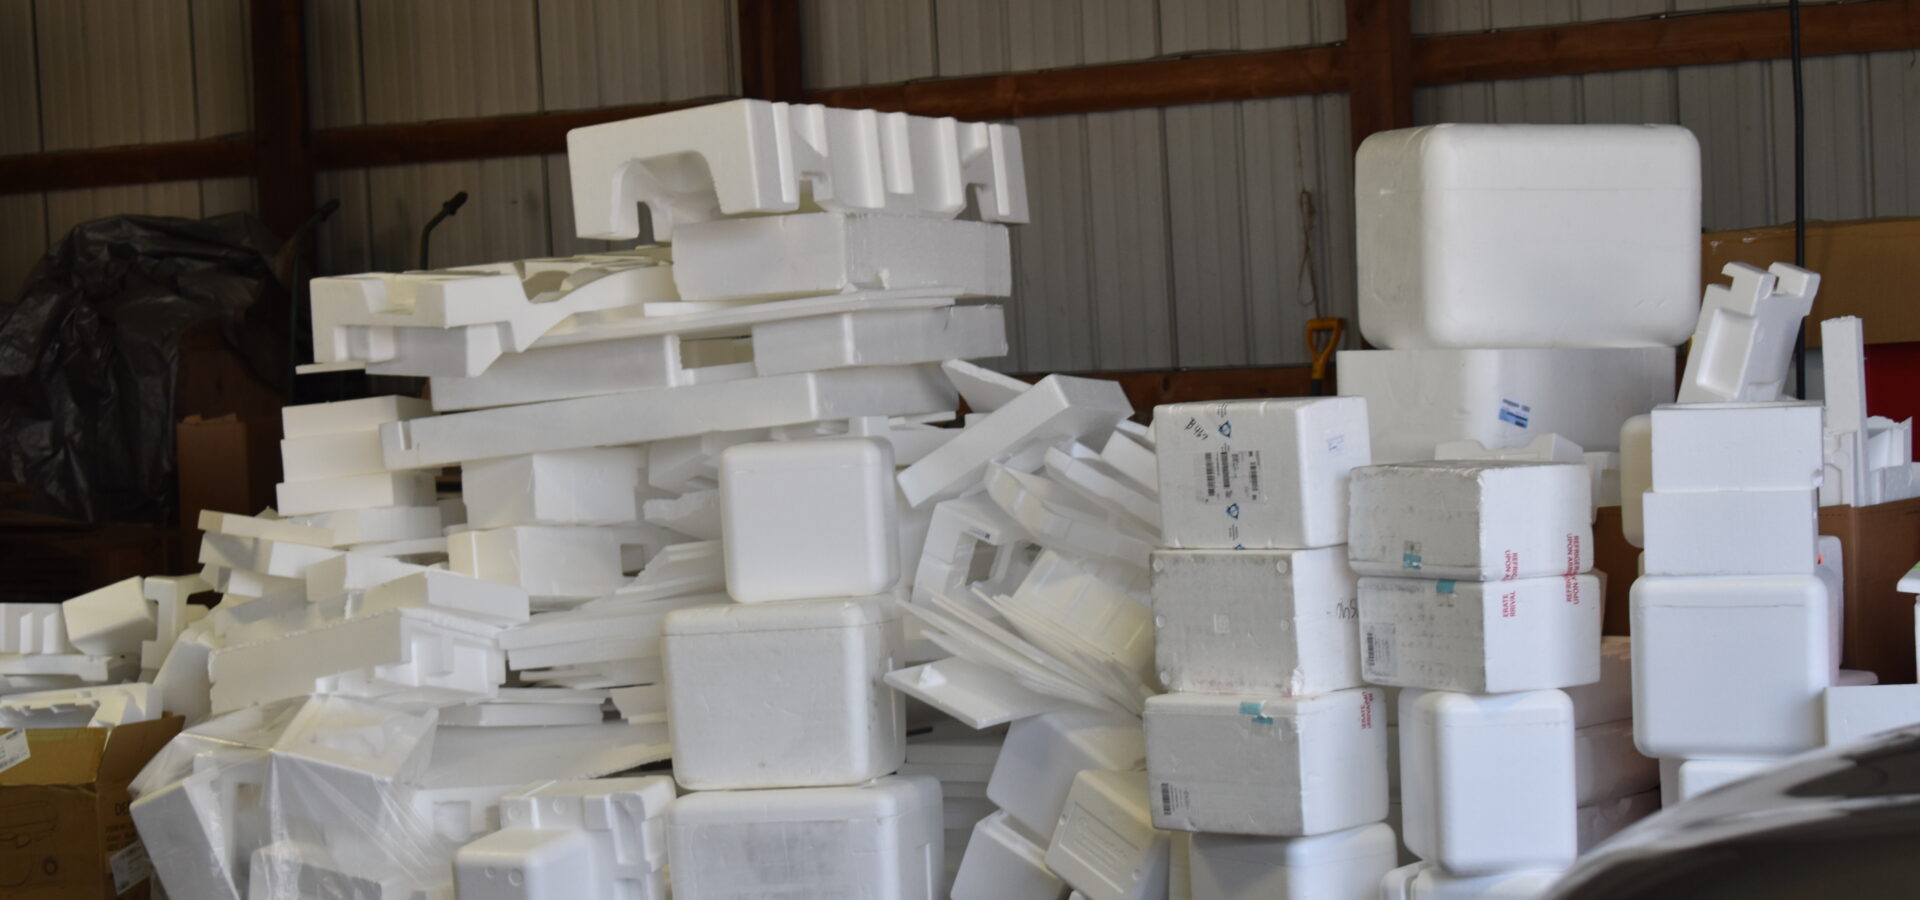 A pile of styrofoam